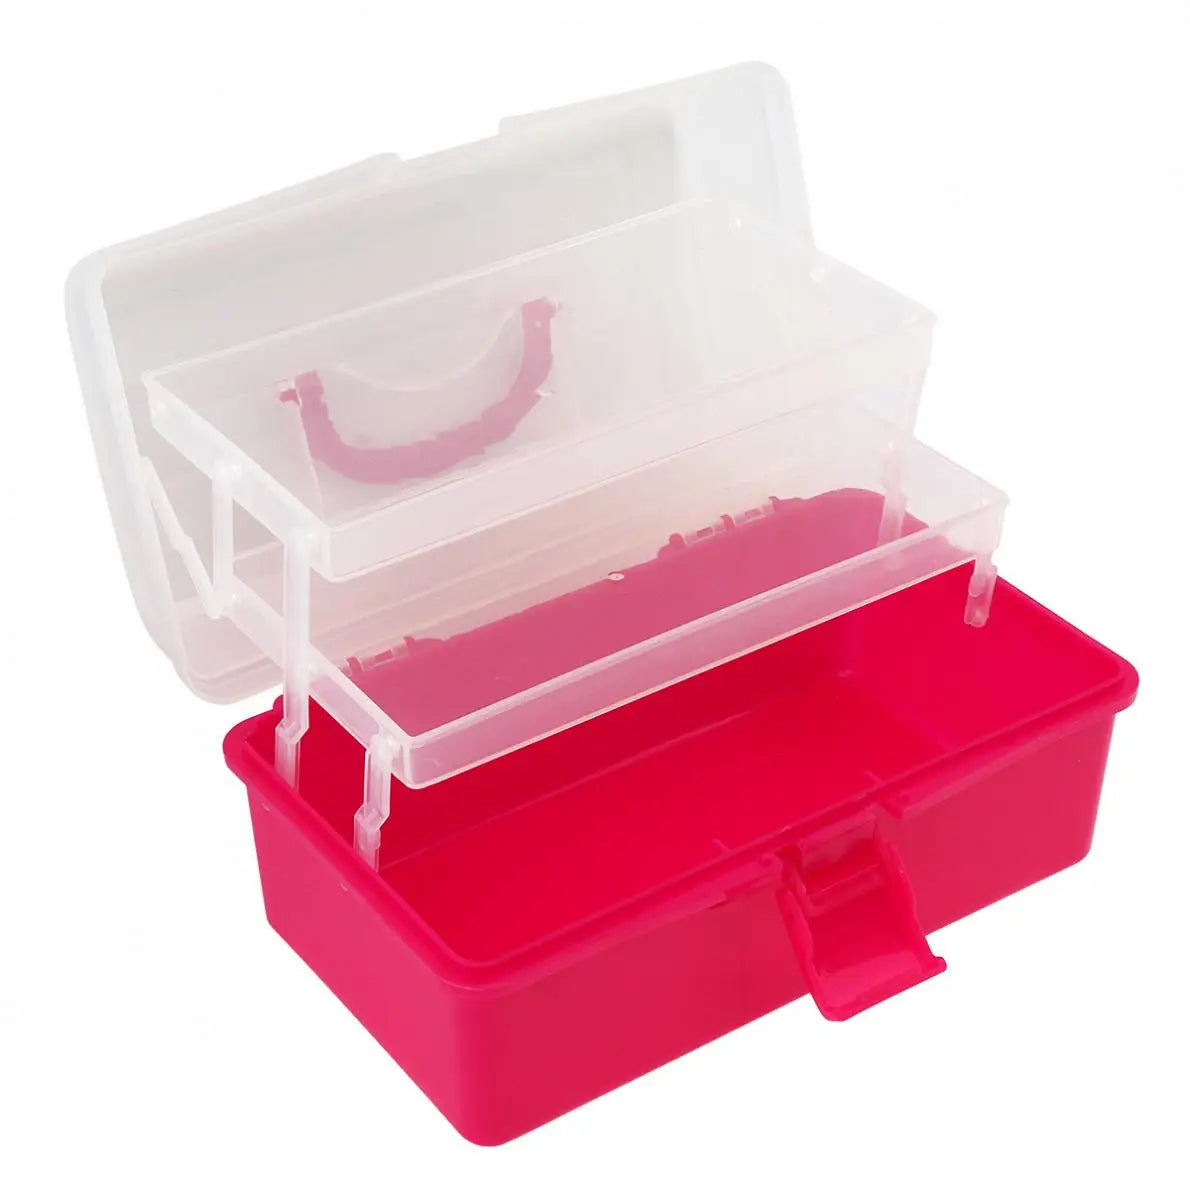 9 Inch PP Plastic Portable Handheld Three-layer Tool Storage Box